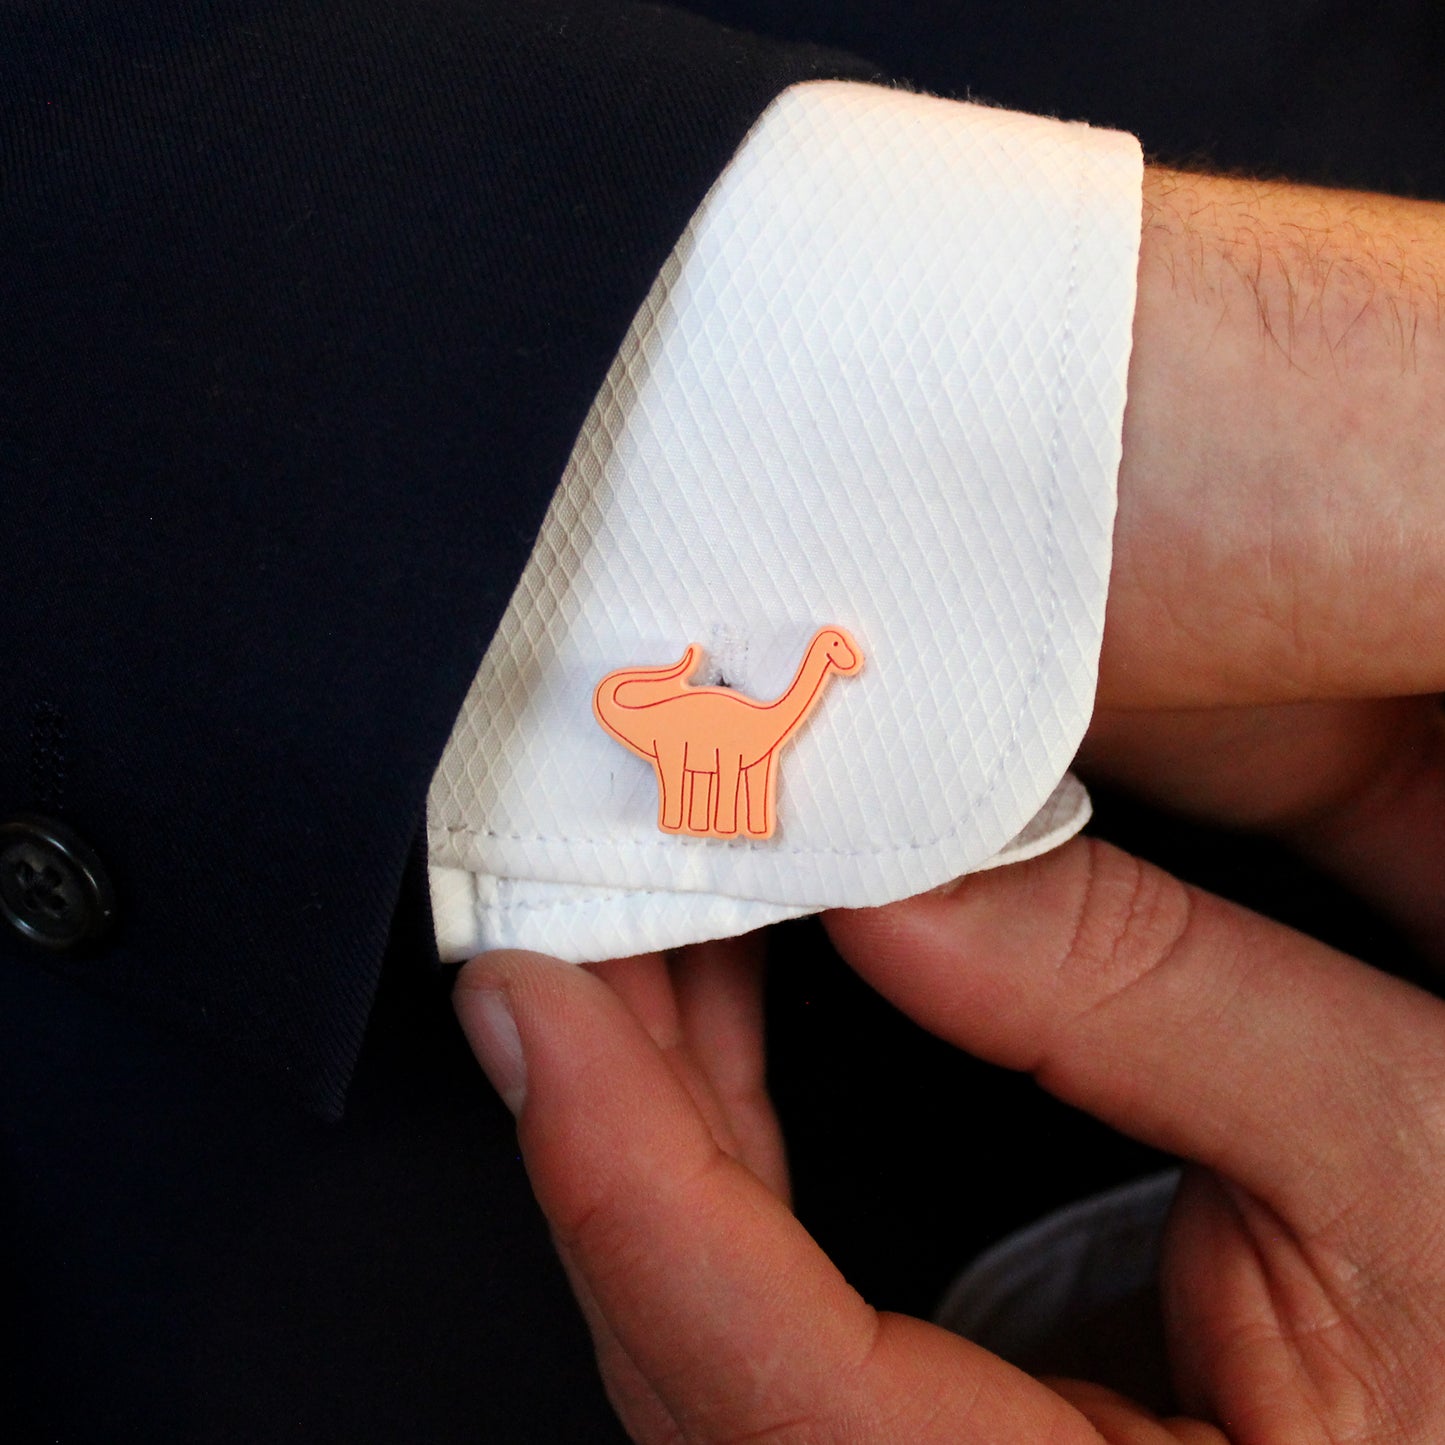 an orange brontosaurus cufflink on a white shirt being held by a hand